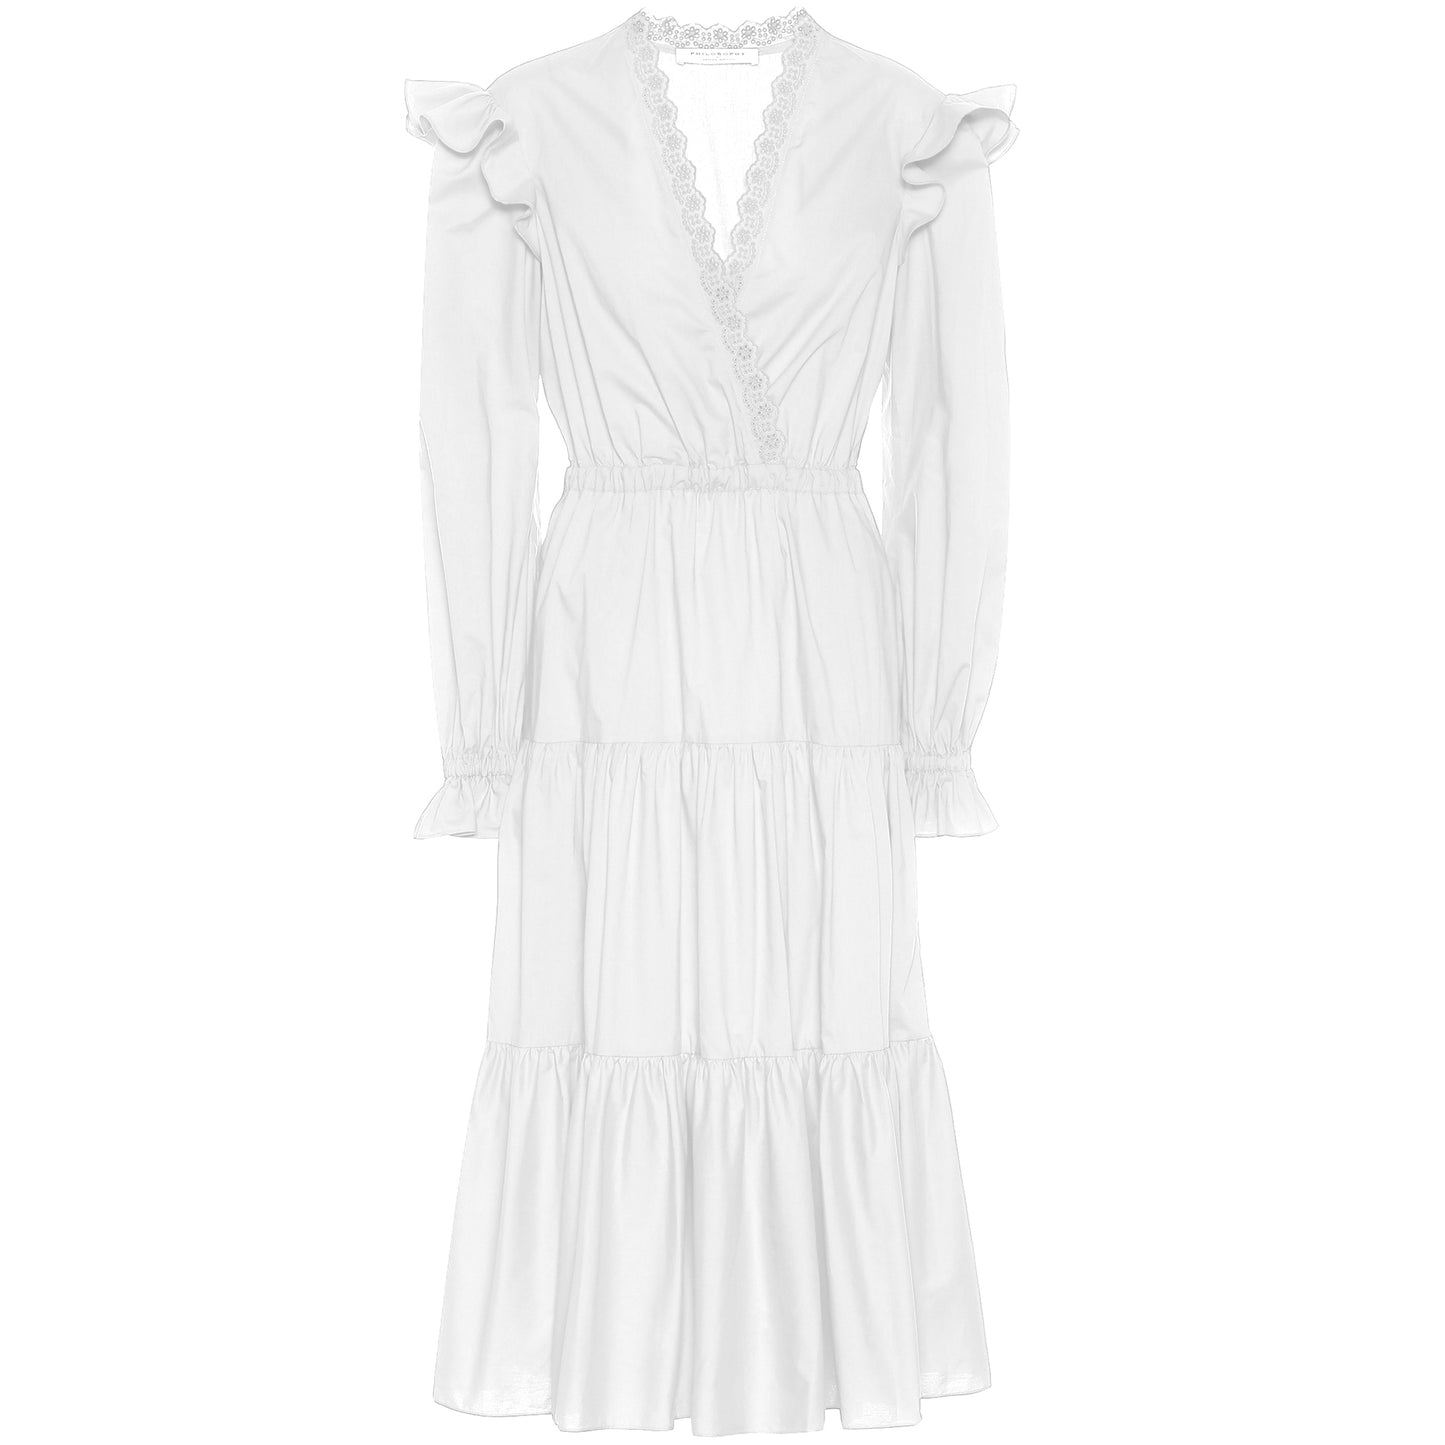 Philosophy di Lorenzo Serafini Women's White Cotton Long Sleeve Dress